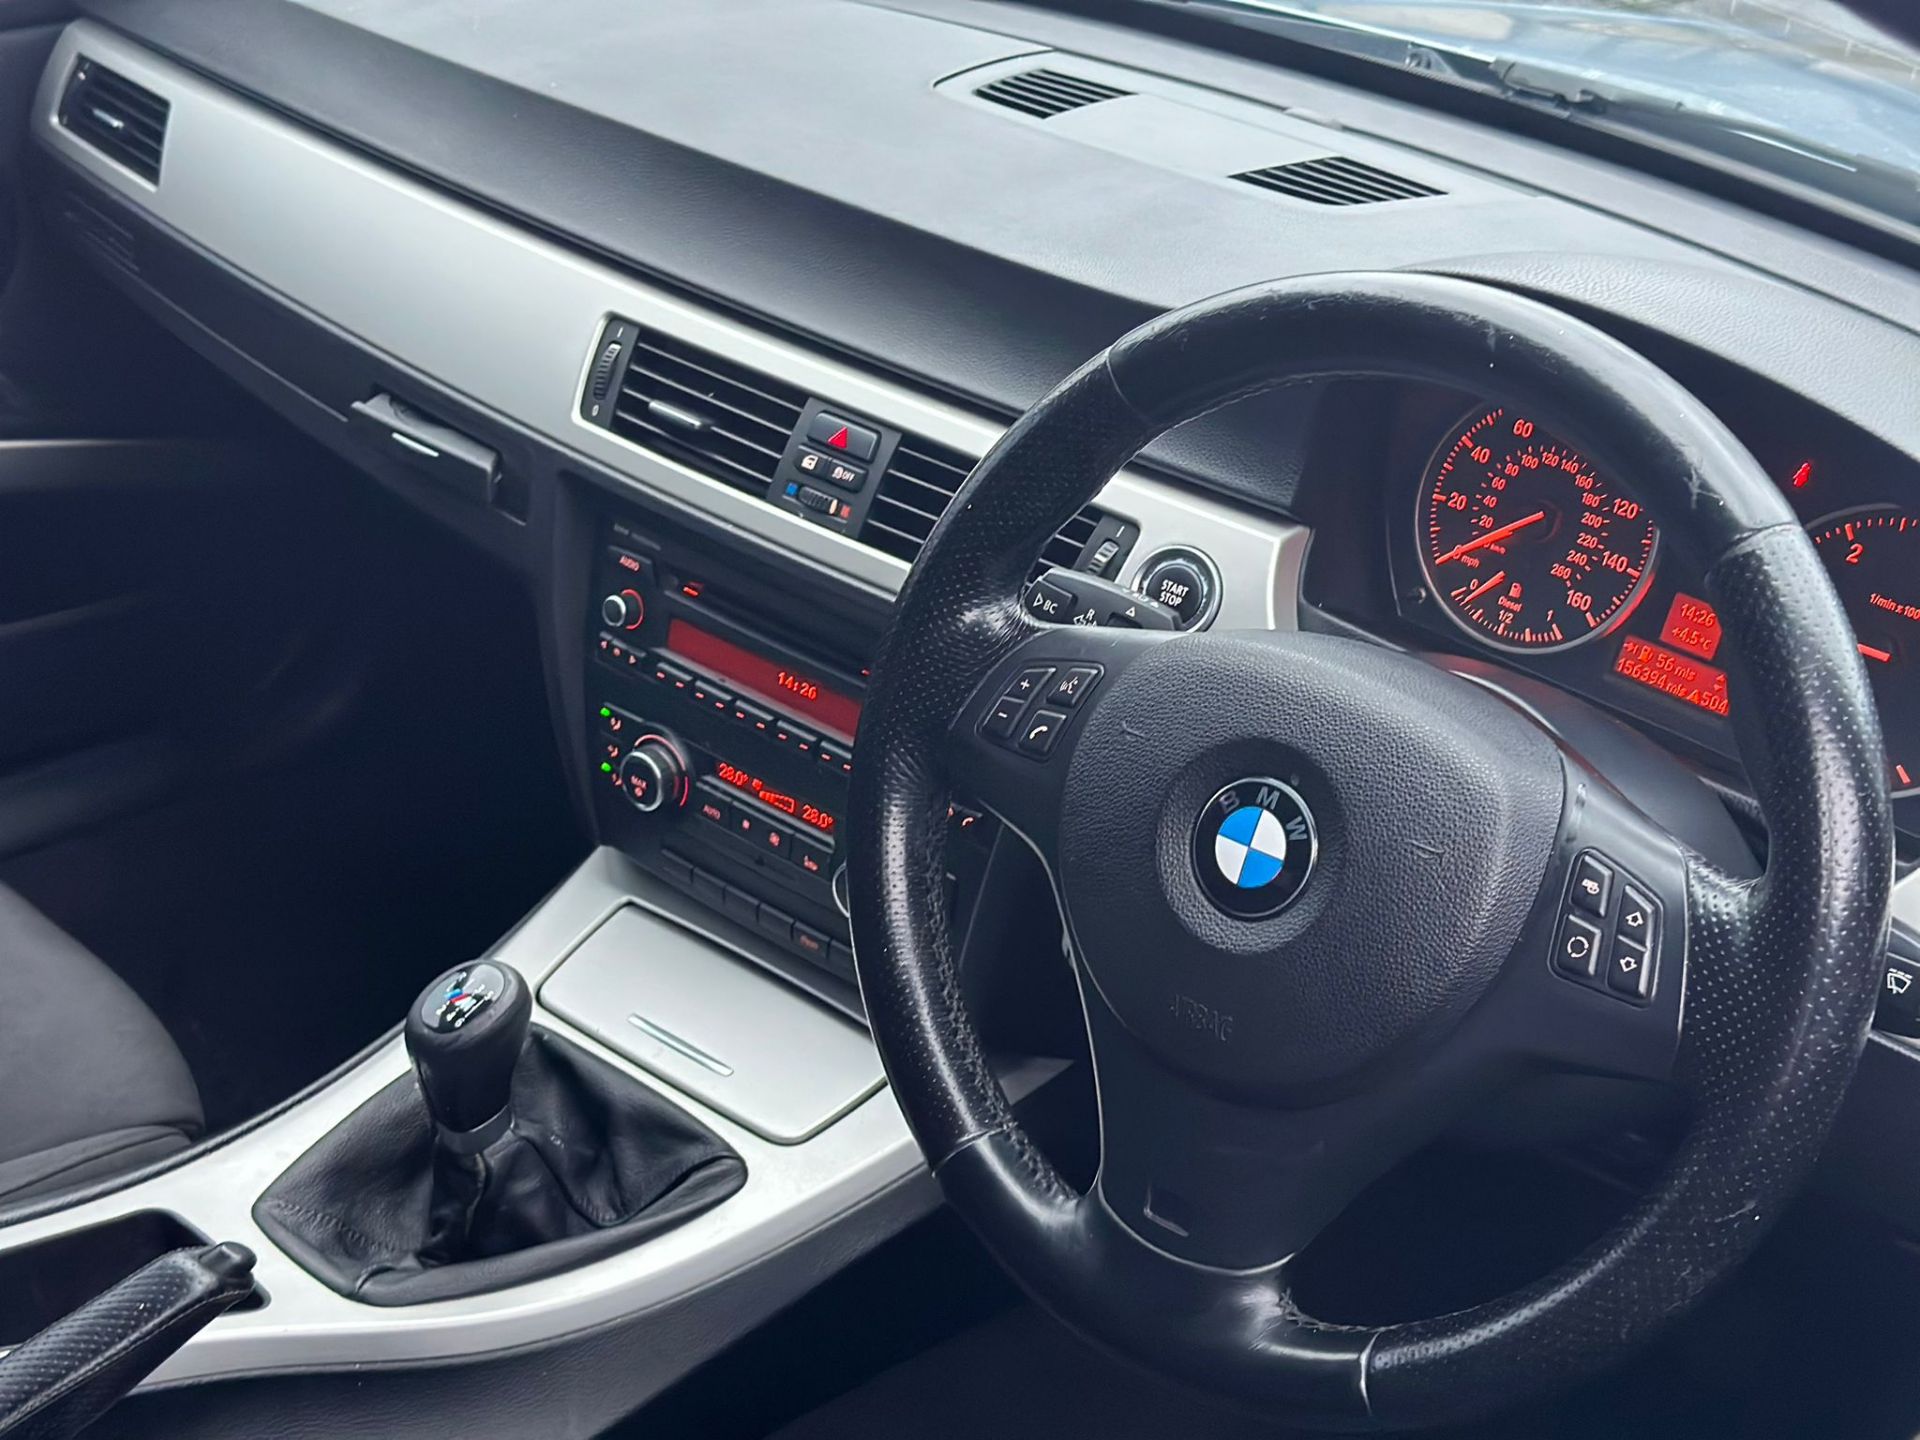 2011 BMW 318d Performance Edition 2.0 Diesel Manual 4 Door Saloon - Image 10 of 12